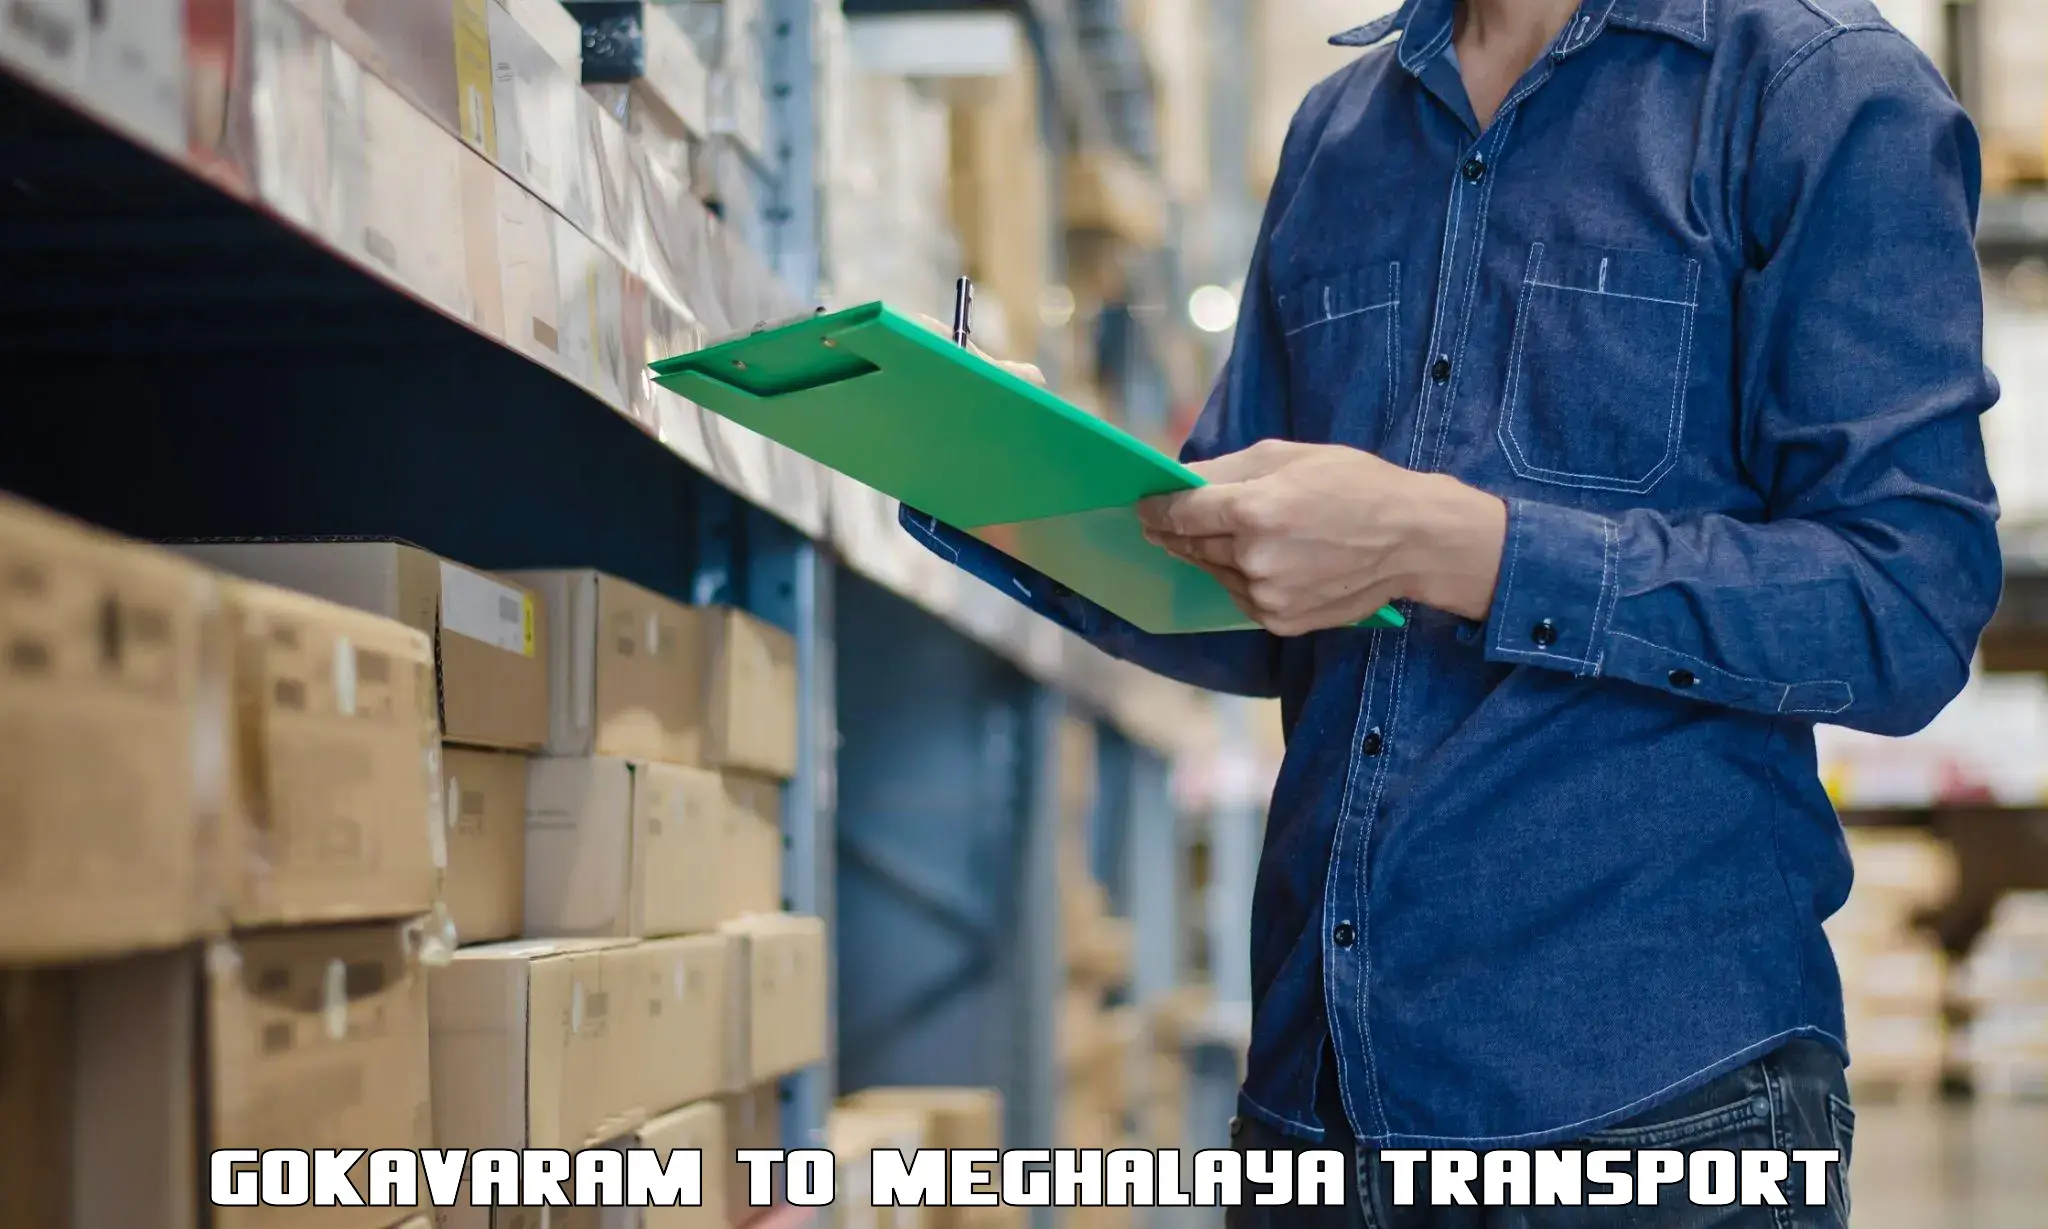 Container transport service Gokavaram to West Garo Hills